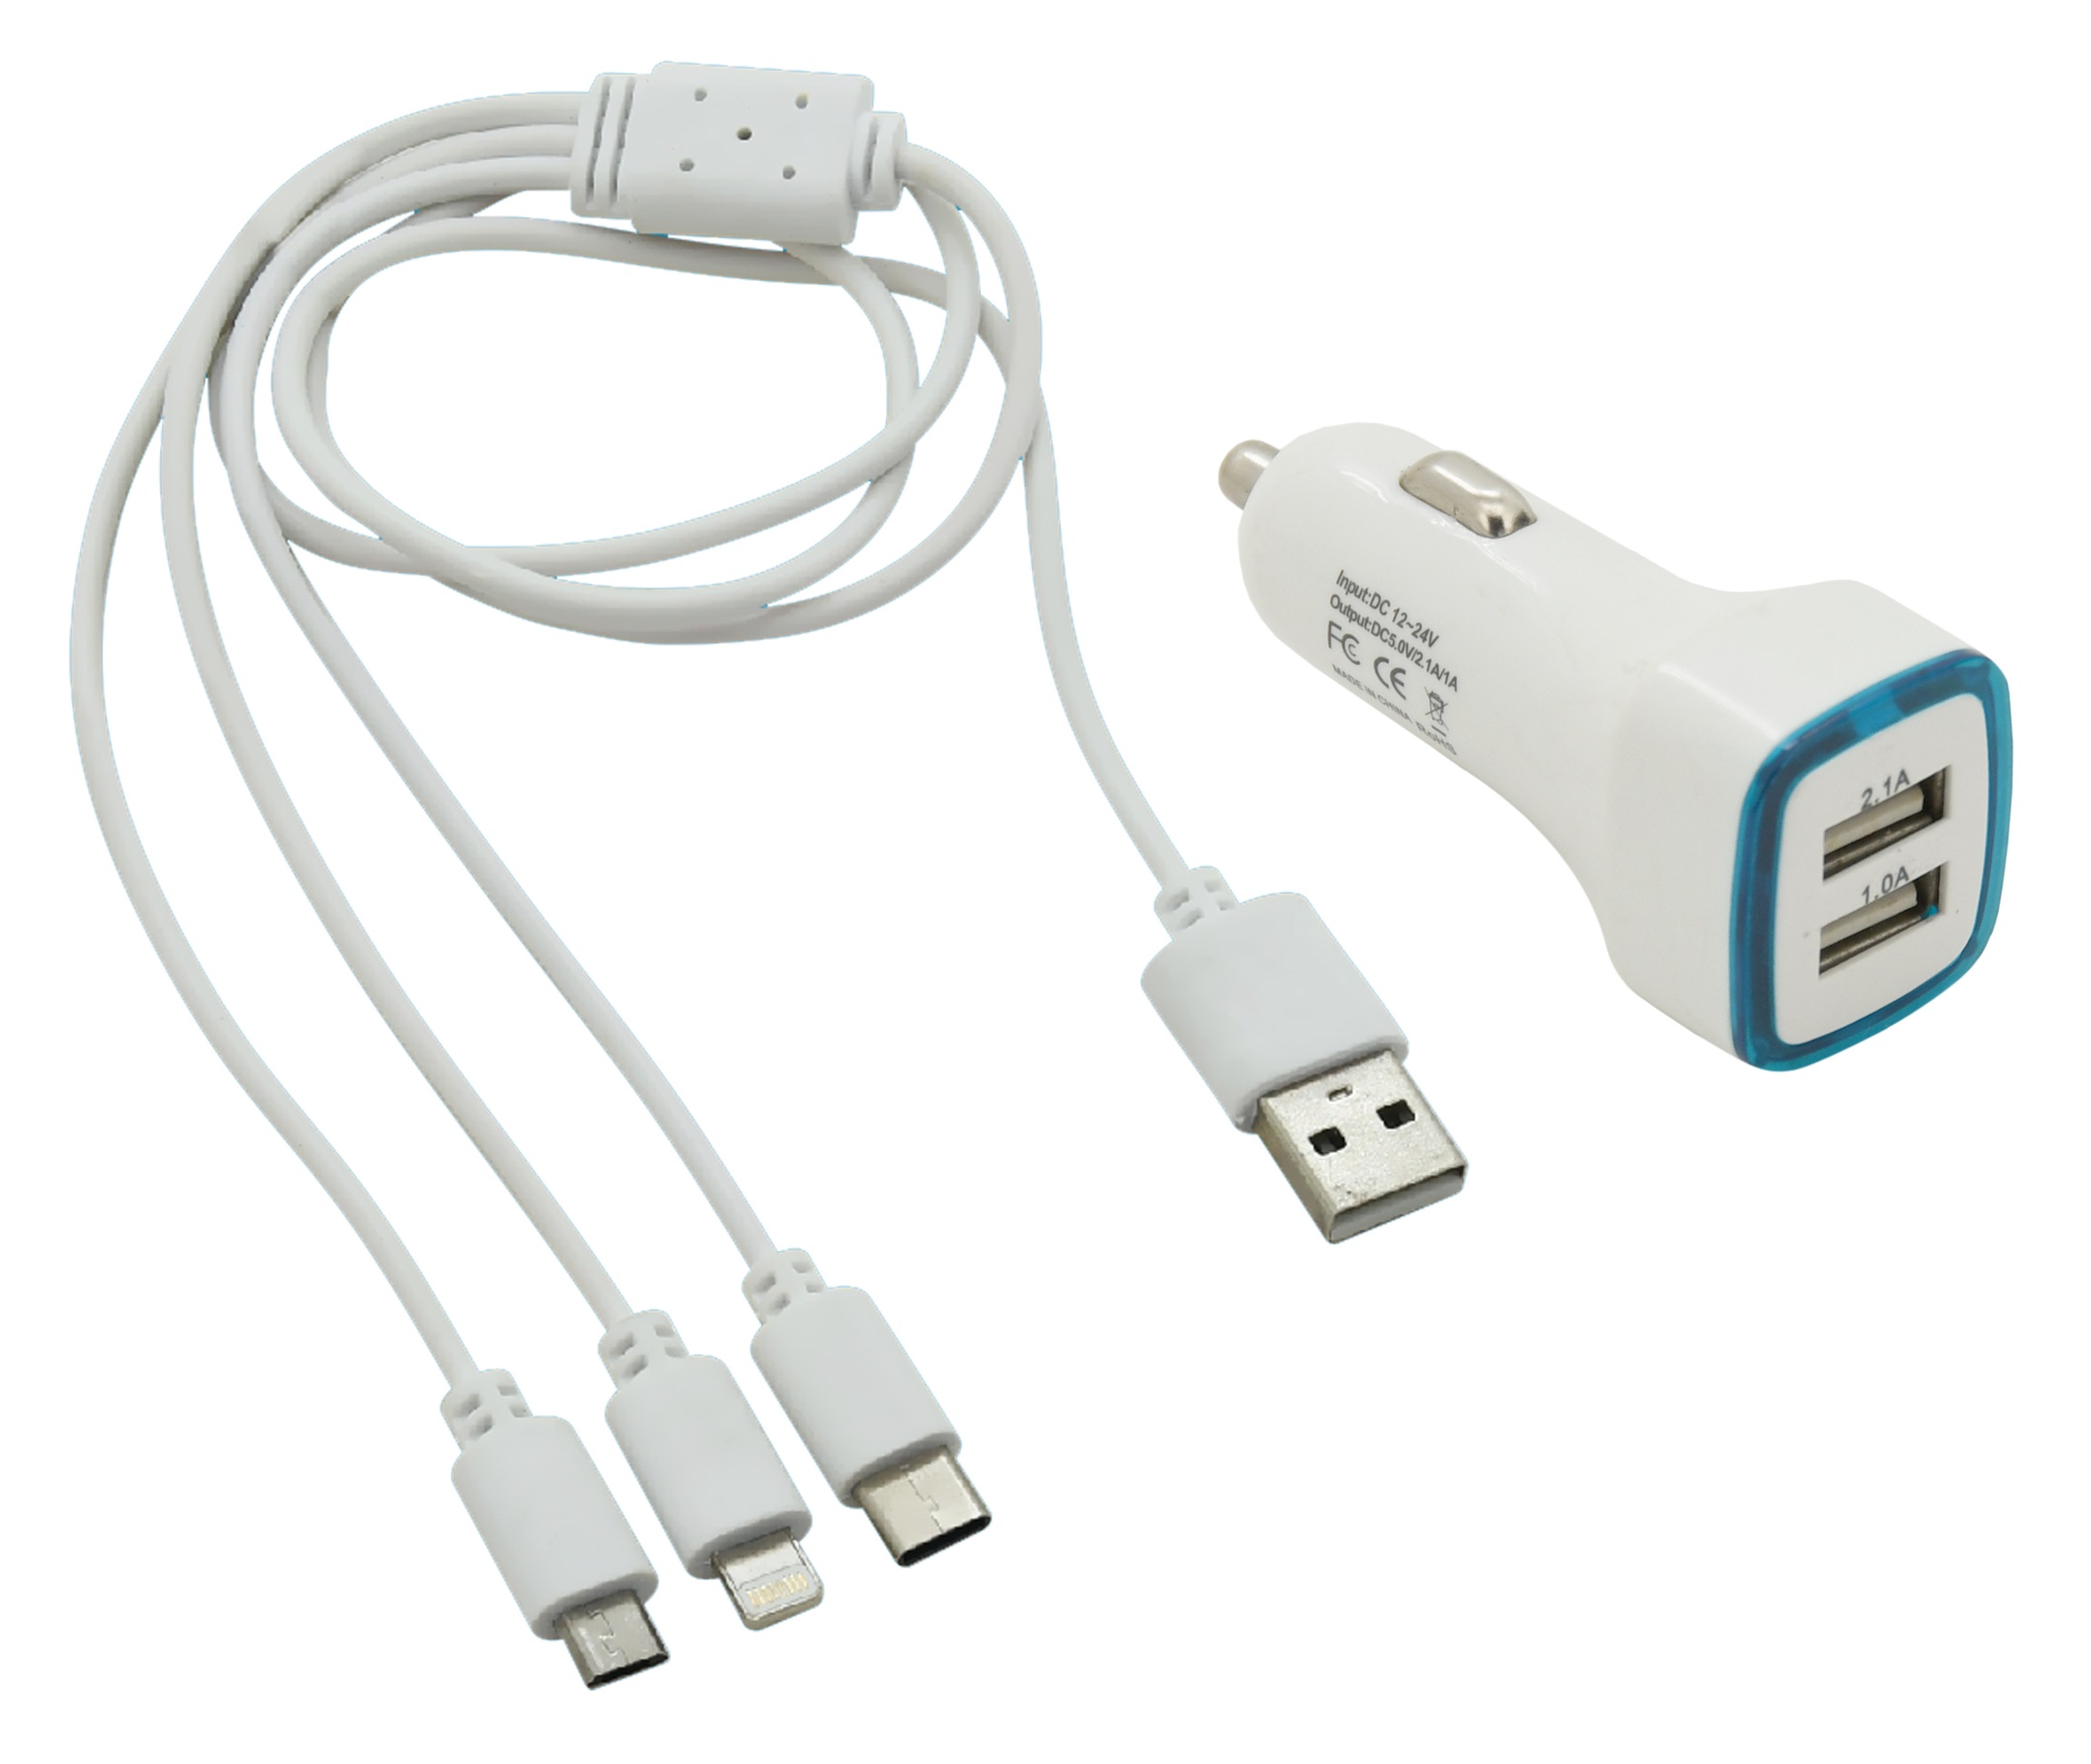 Nabíječka telefonu USB 3in1 (micro USB, iPhone, USB C)